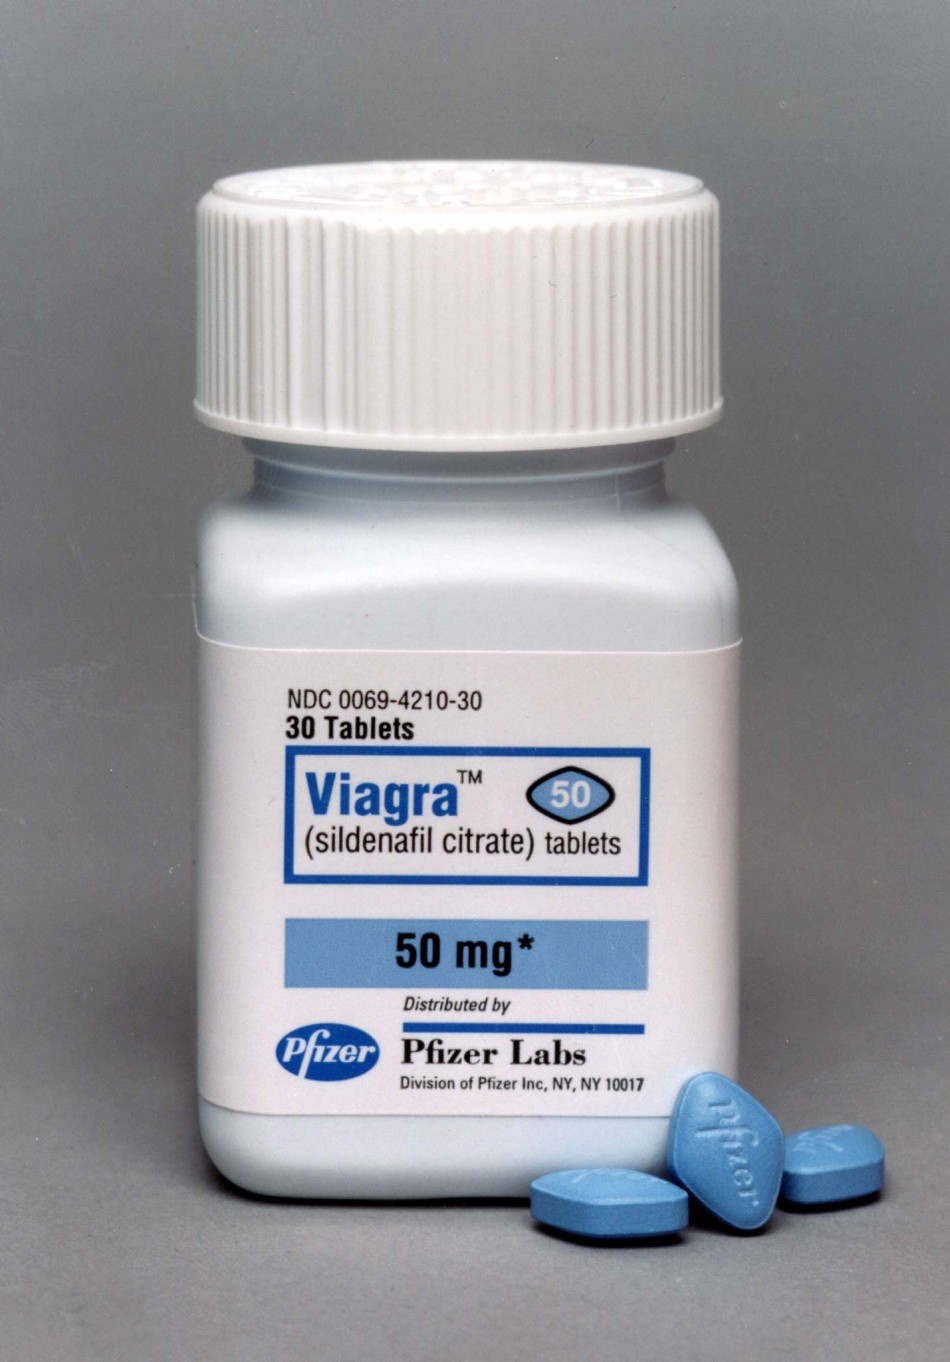 UK Faces Flood of Cheap Viagra Alternatives as Patent Expires